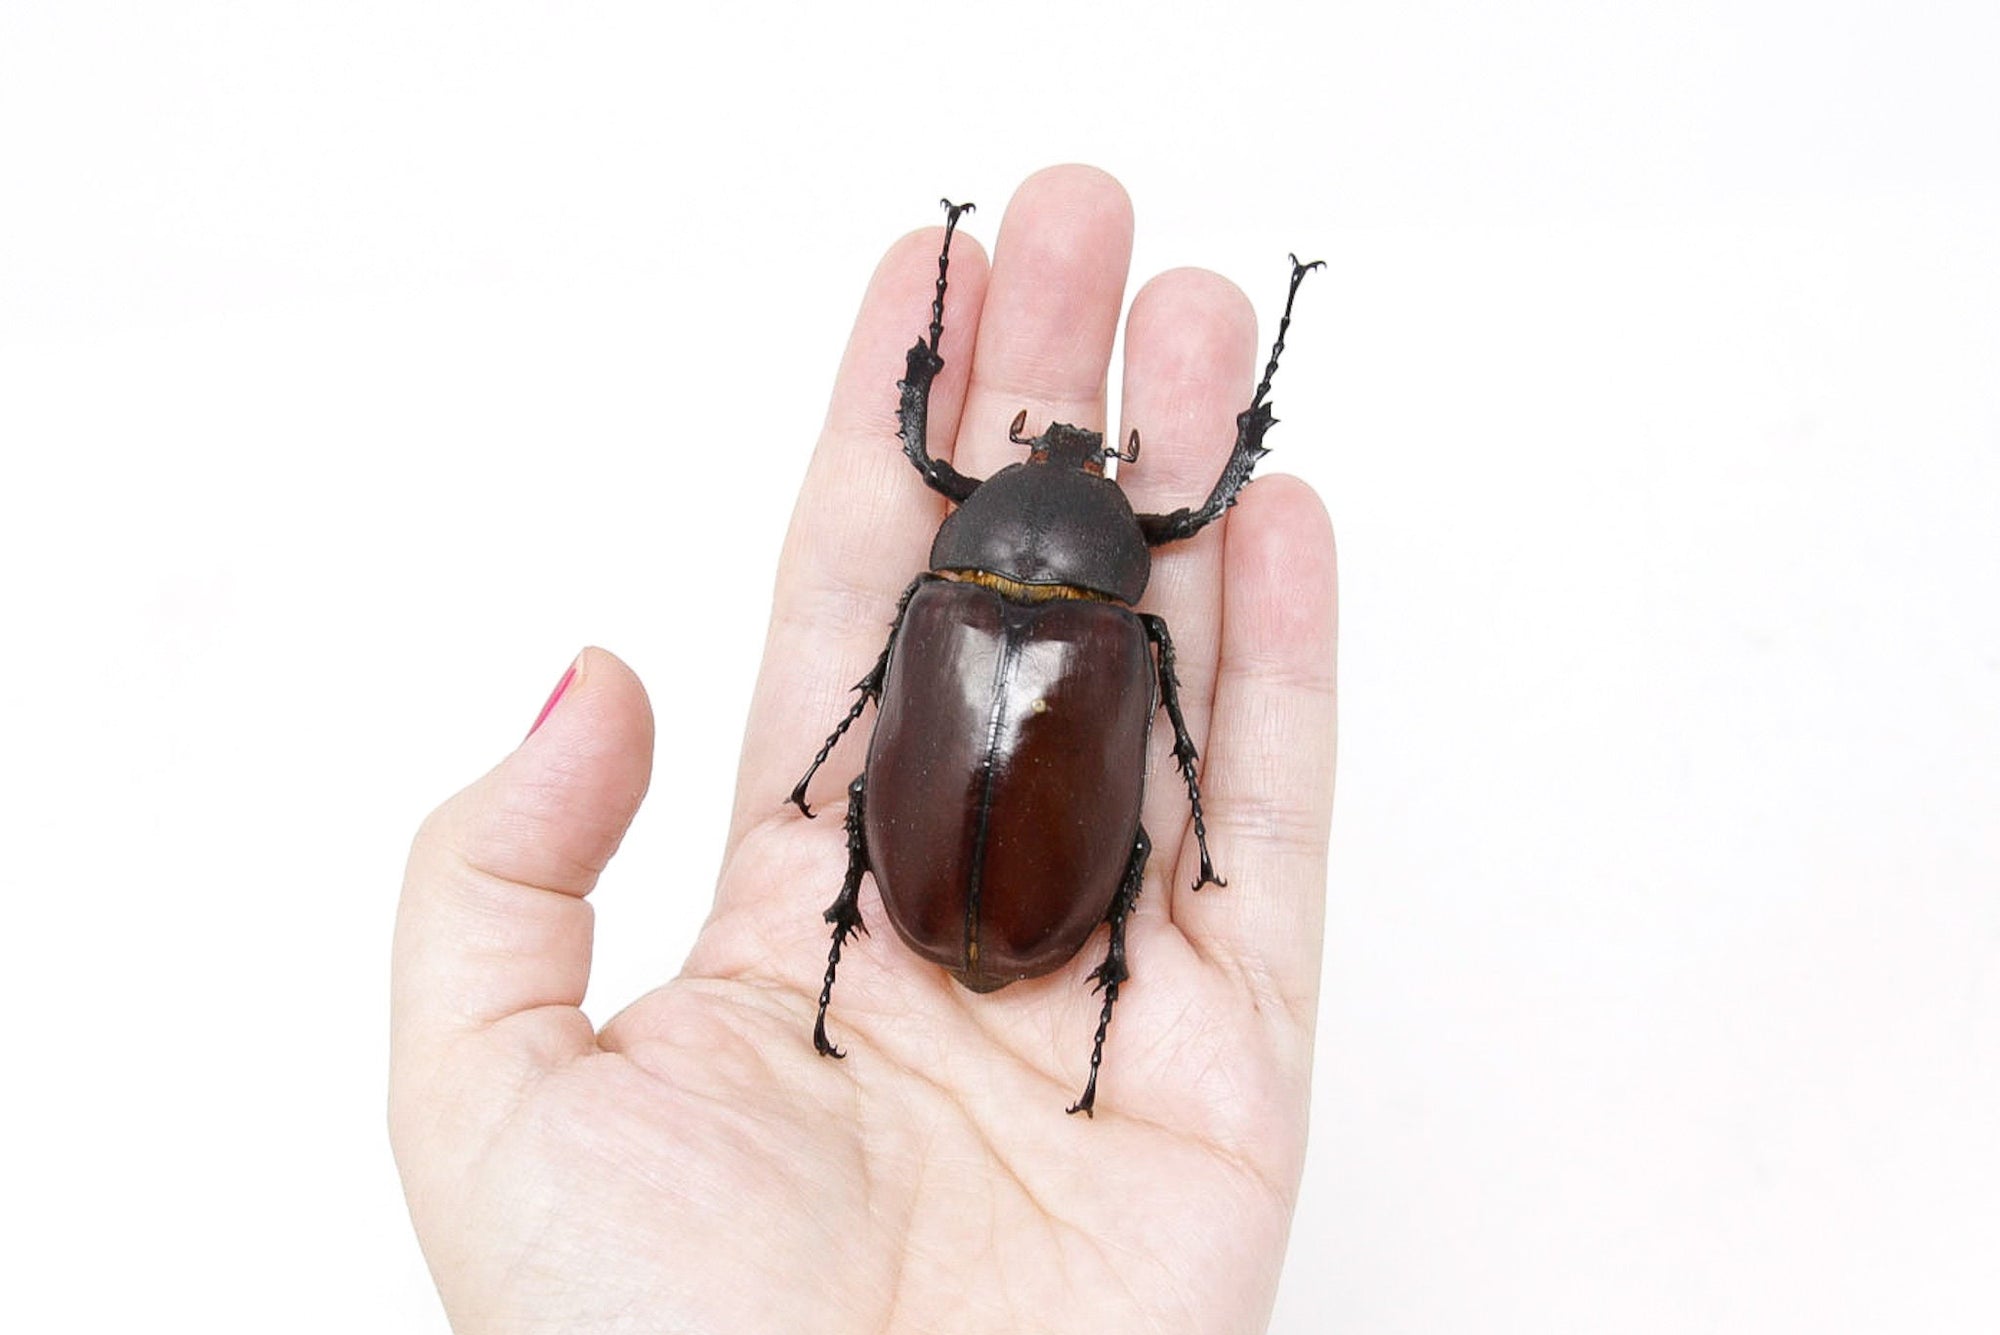 Euchirus longimanus 63.3mm, A1 Real Beetle Set Specimen, Entomology Taxidermy #OC17